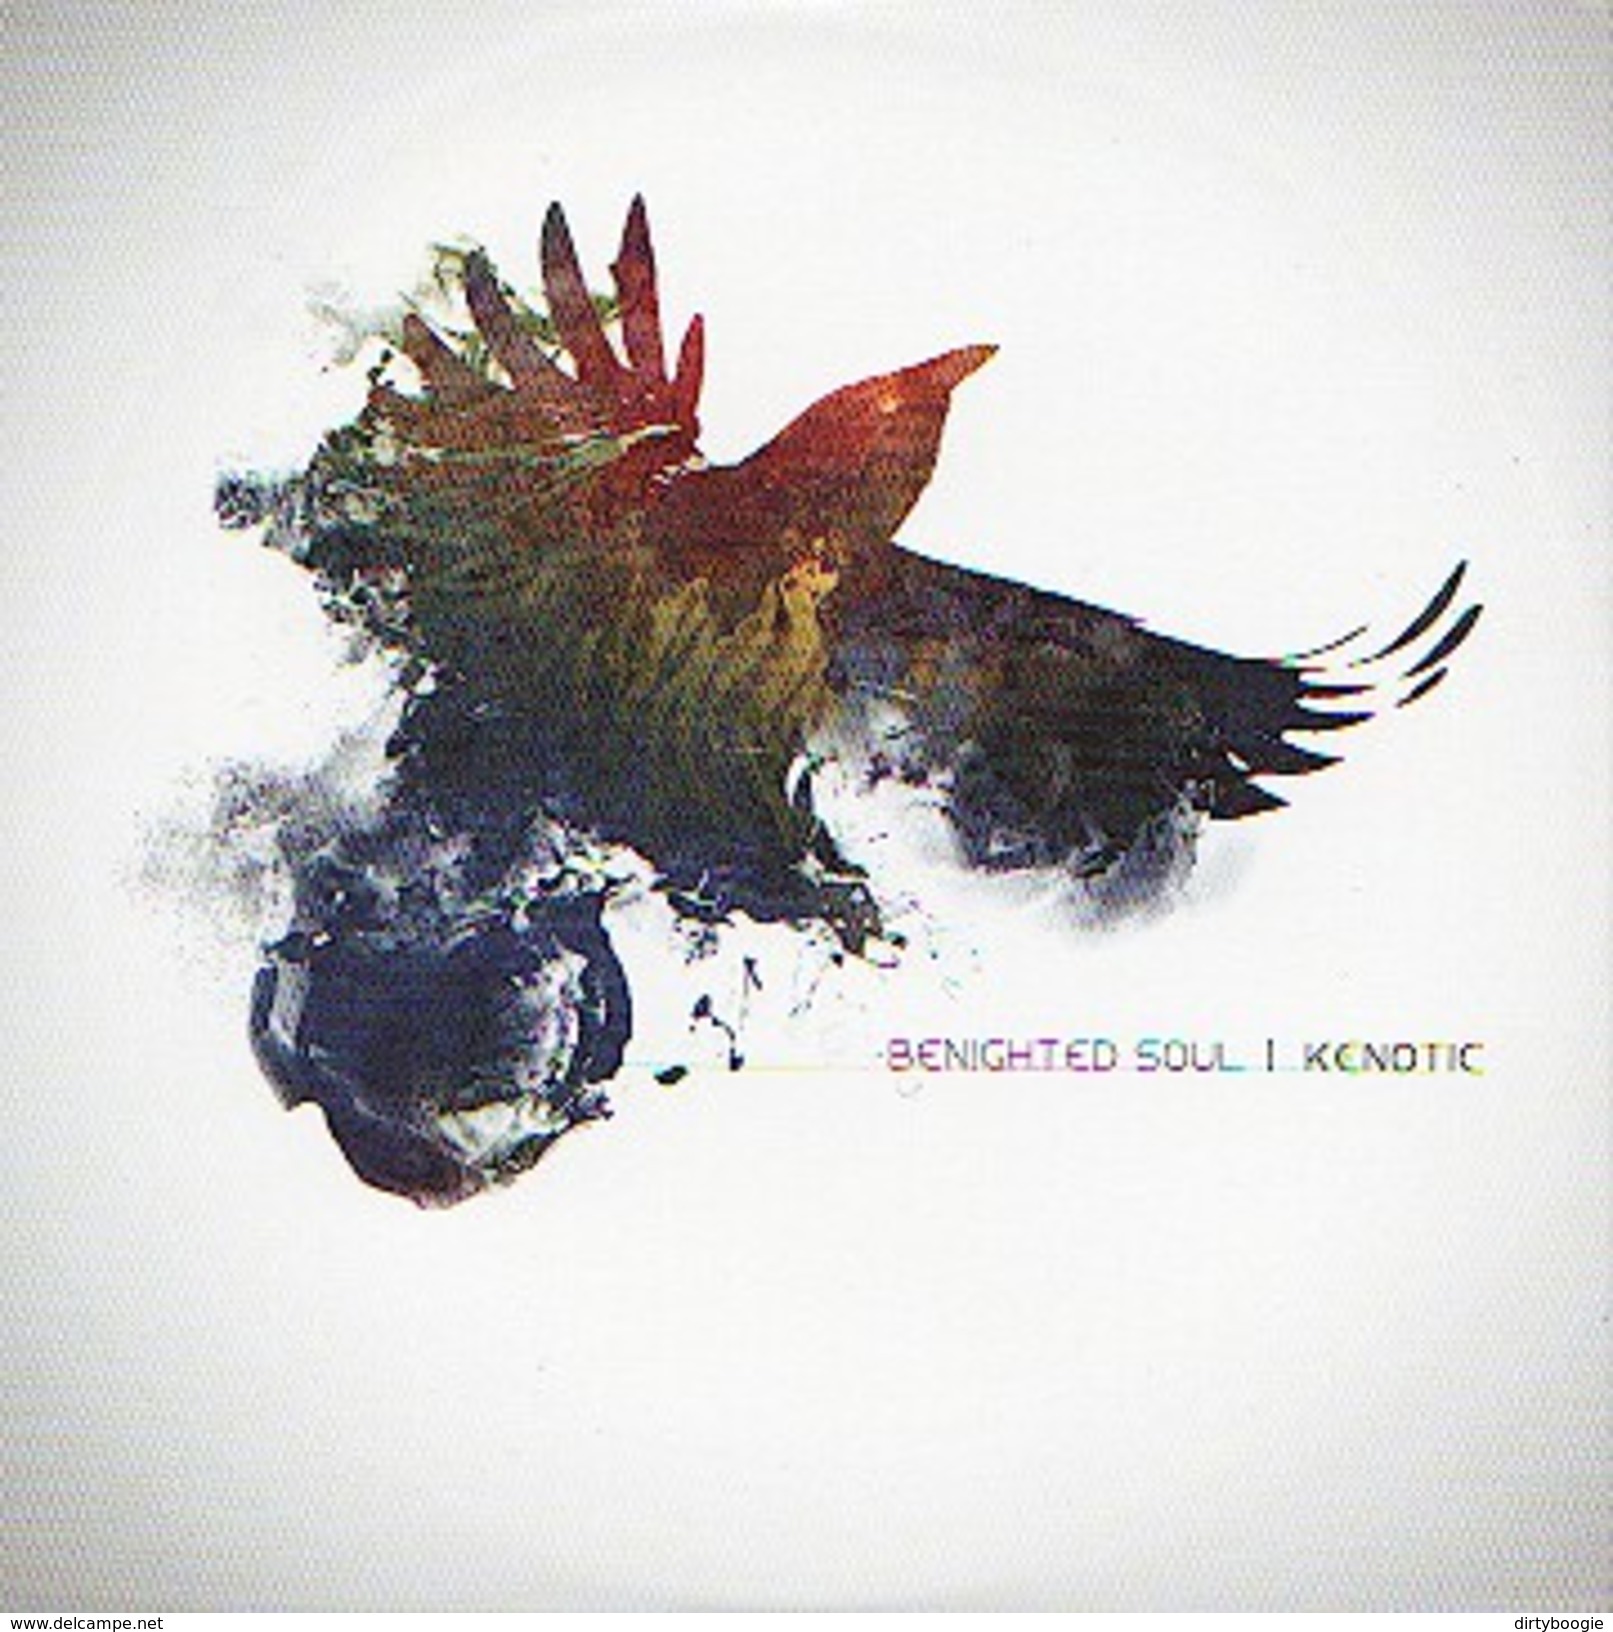 BENIGHTED SOUL - Kenotic - CD - METAL SYMPHONIQUE - Hard Rock & Metal